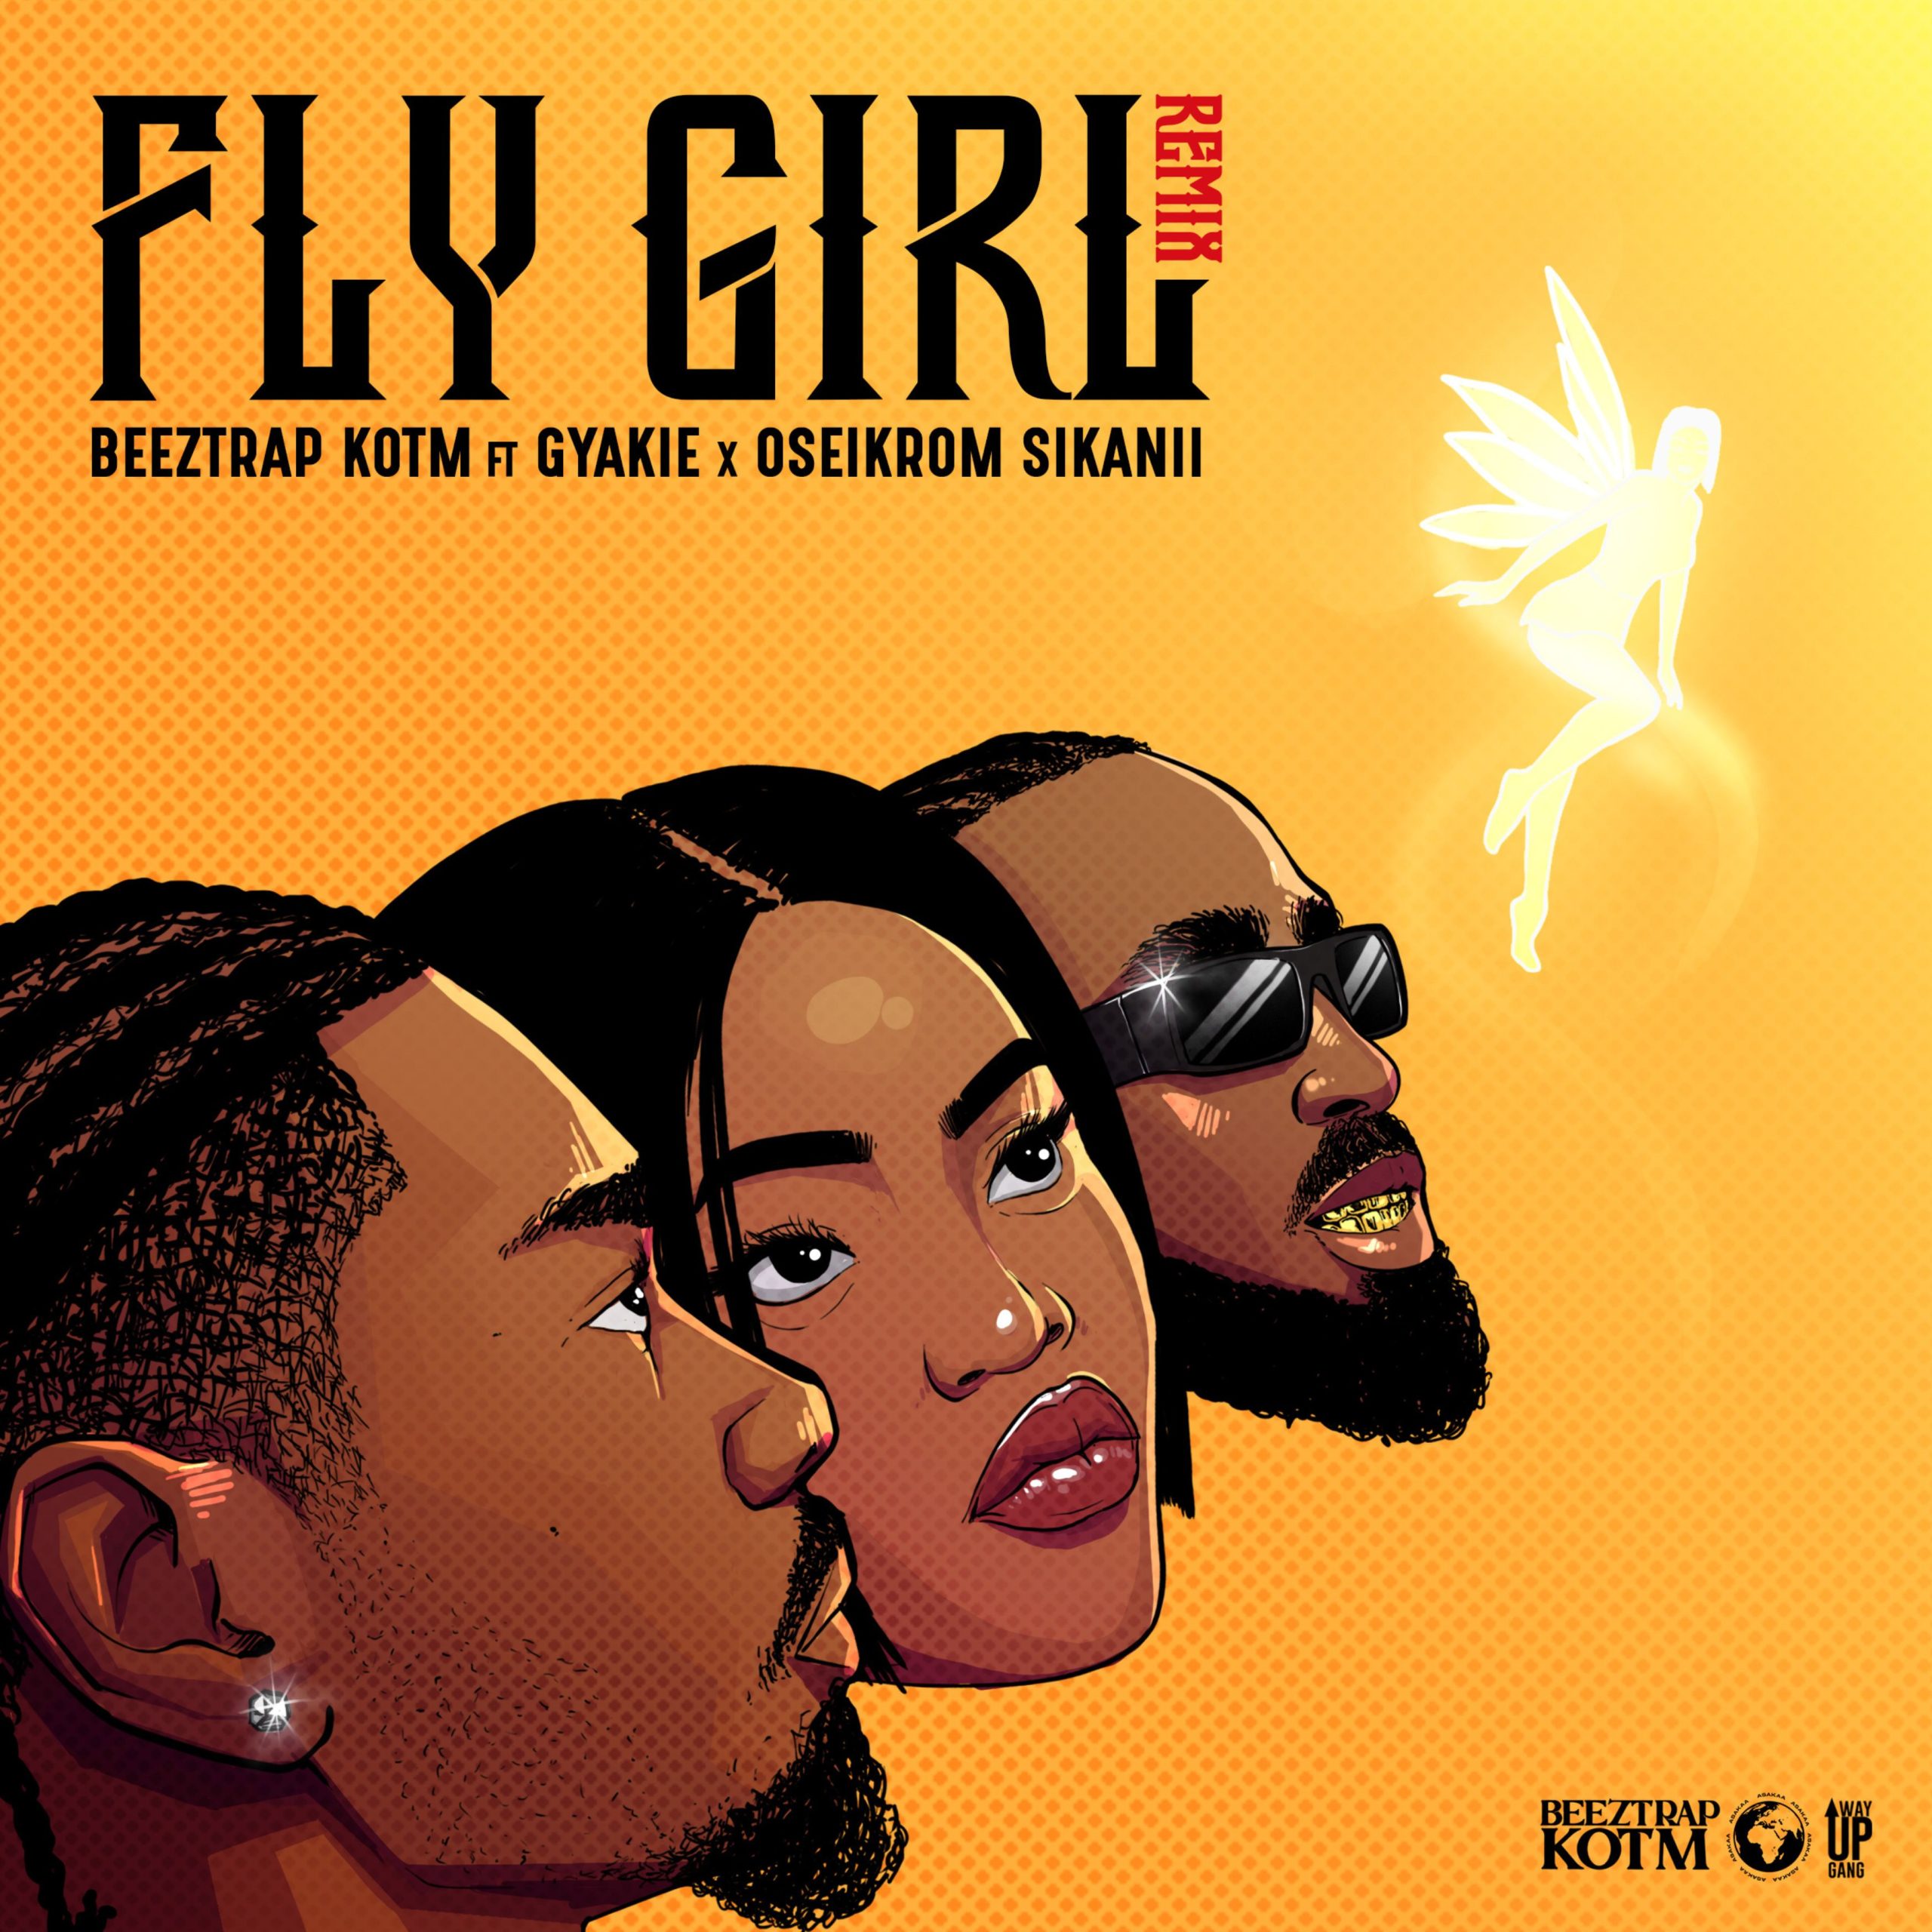 Beeztrap KOTM Fly Girl (Remix) Ft. Gyakie, & Oseikrom Sikanii